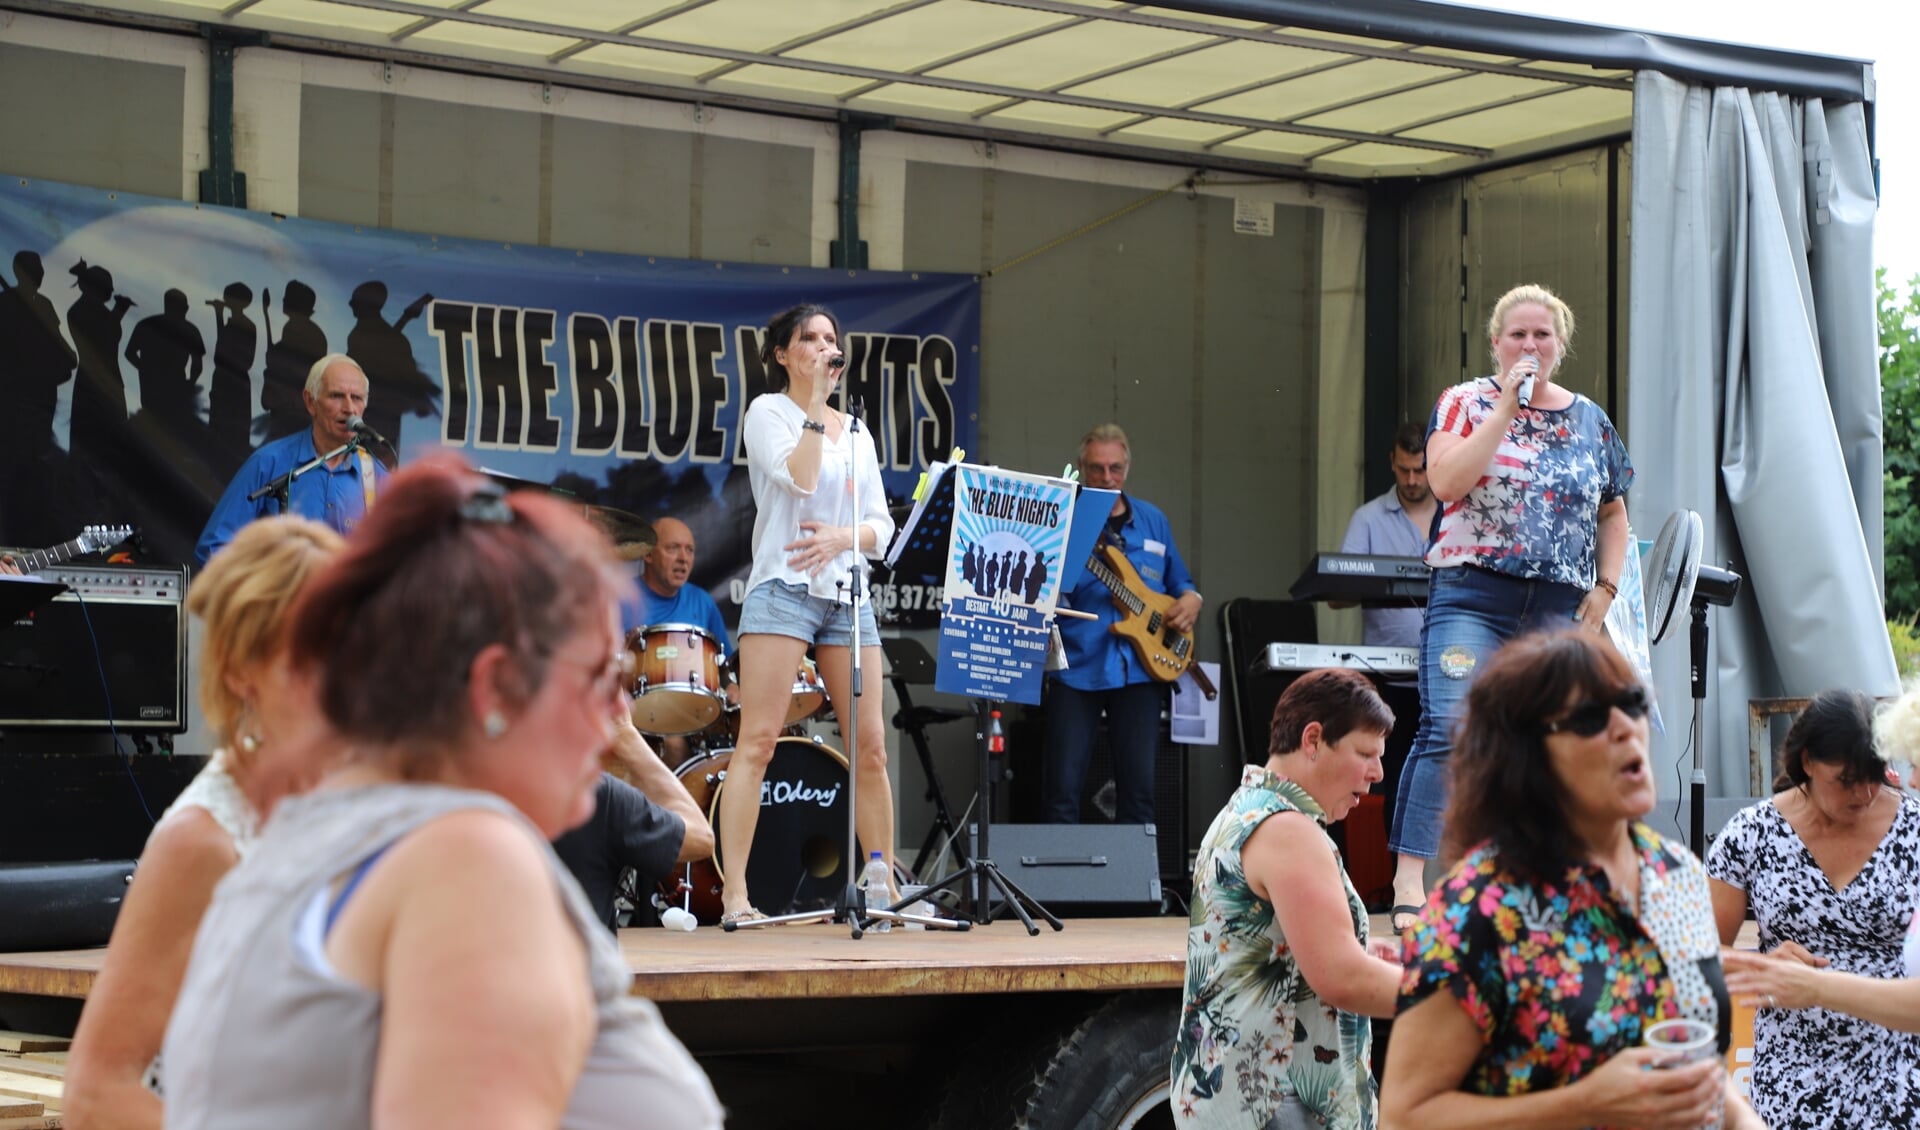 Optredens van coverband The Blue Nights nodigen uit tot enthousiasme onder publiek zoals hier in Lepelstraat.